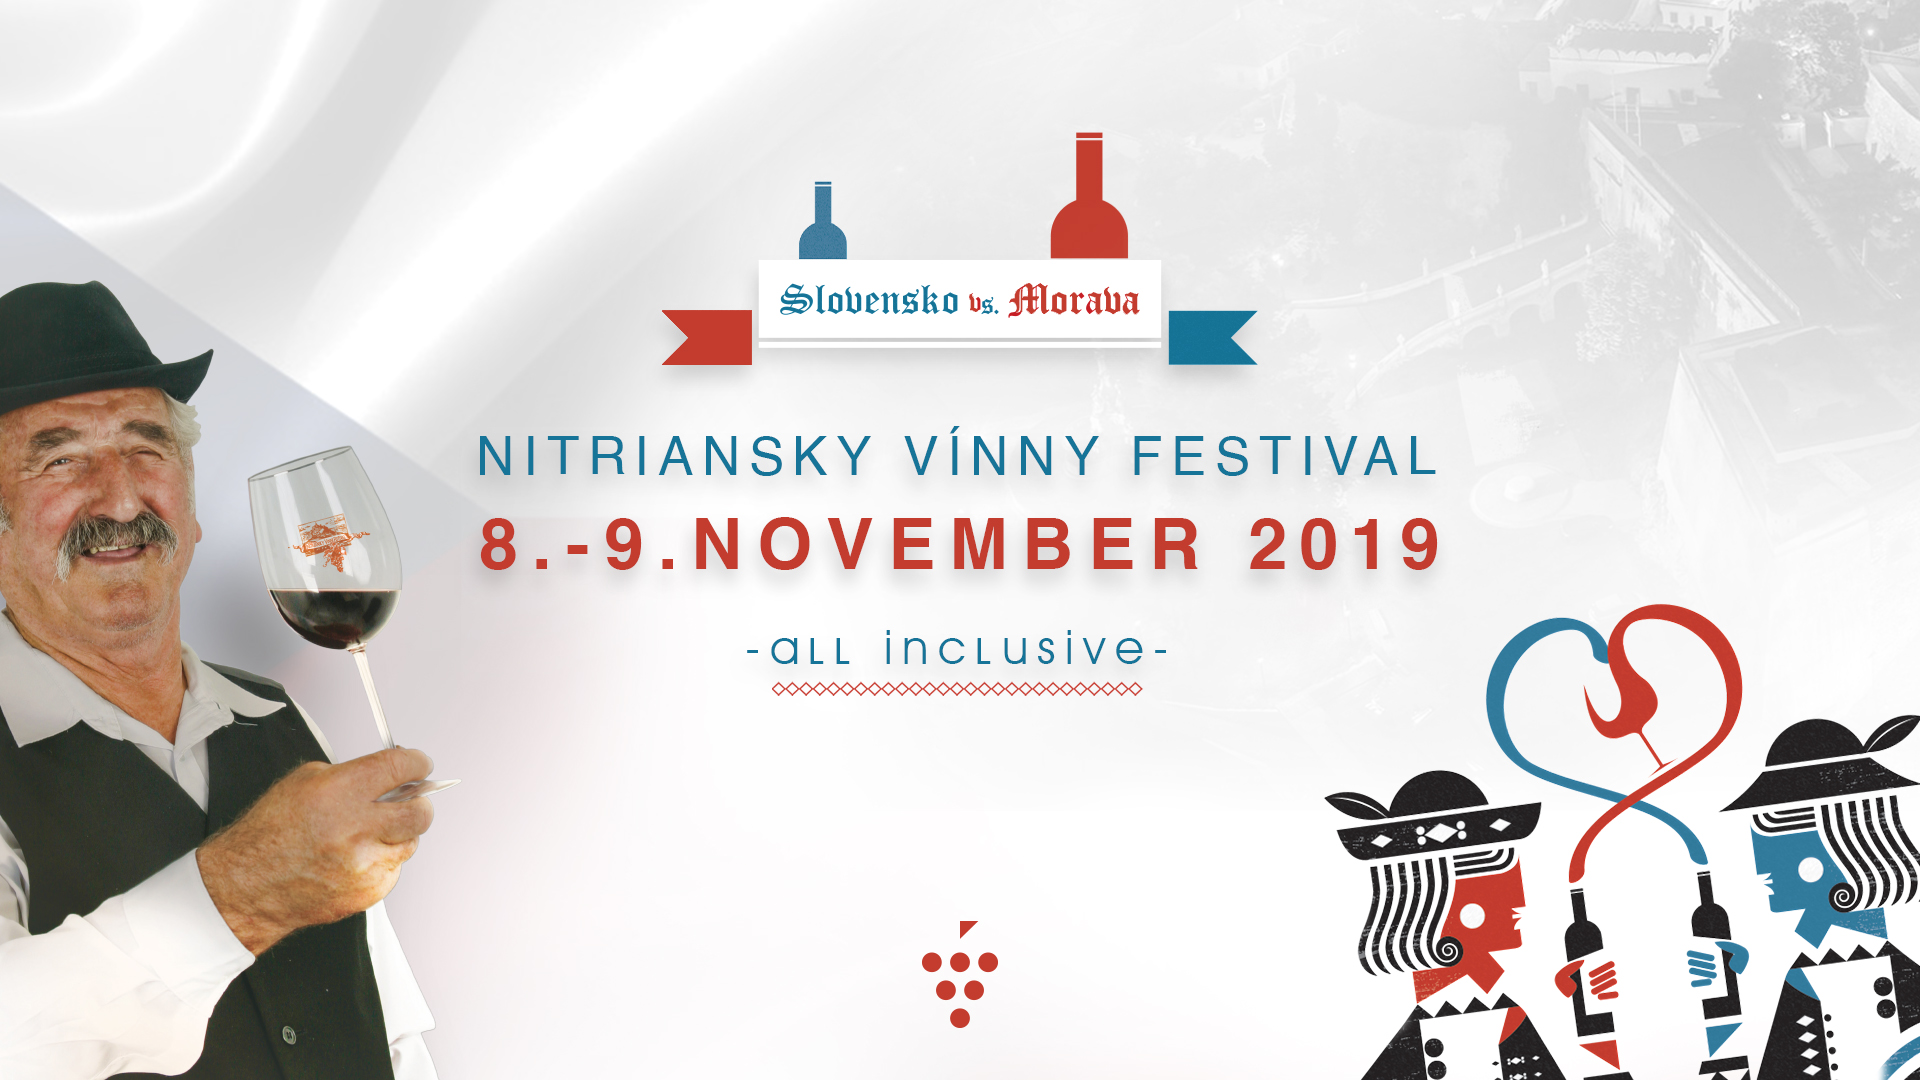 Nitriansky vnny festival 2019   10. ronk 